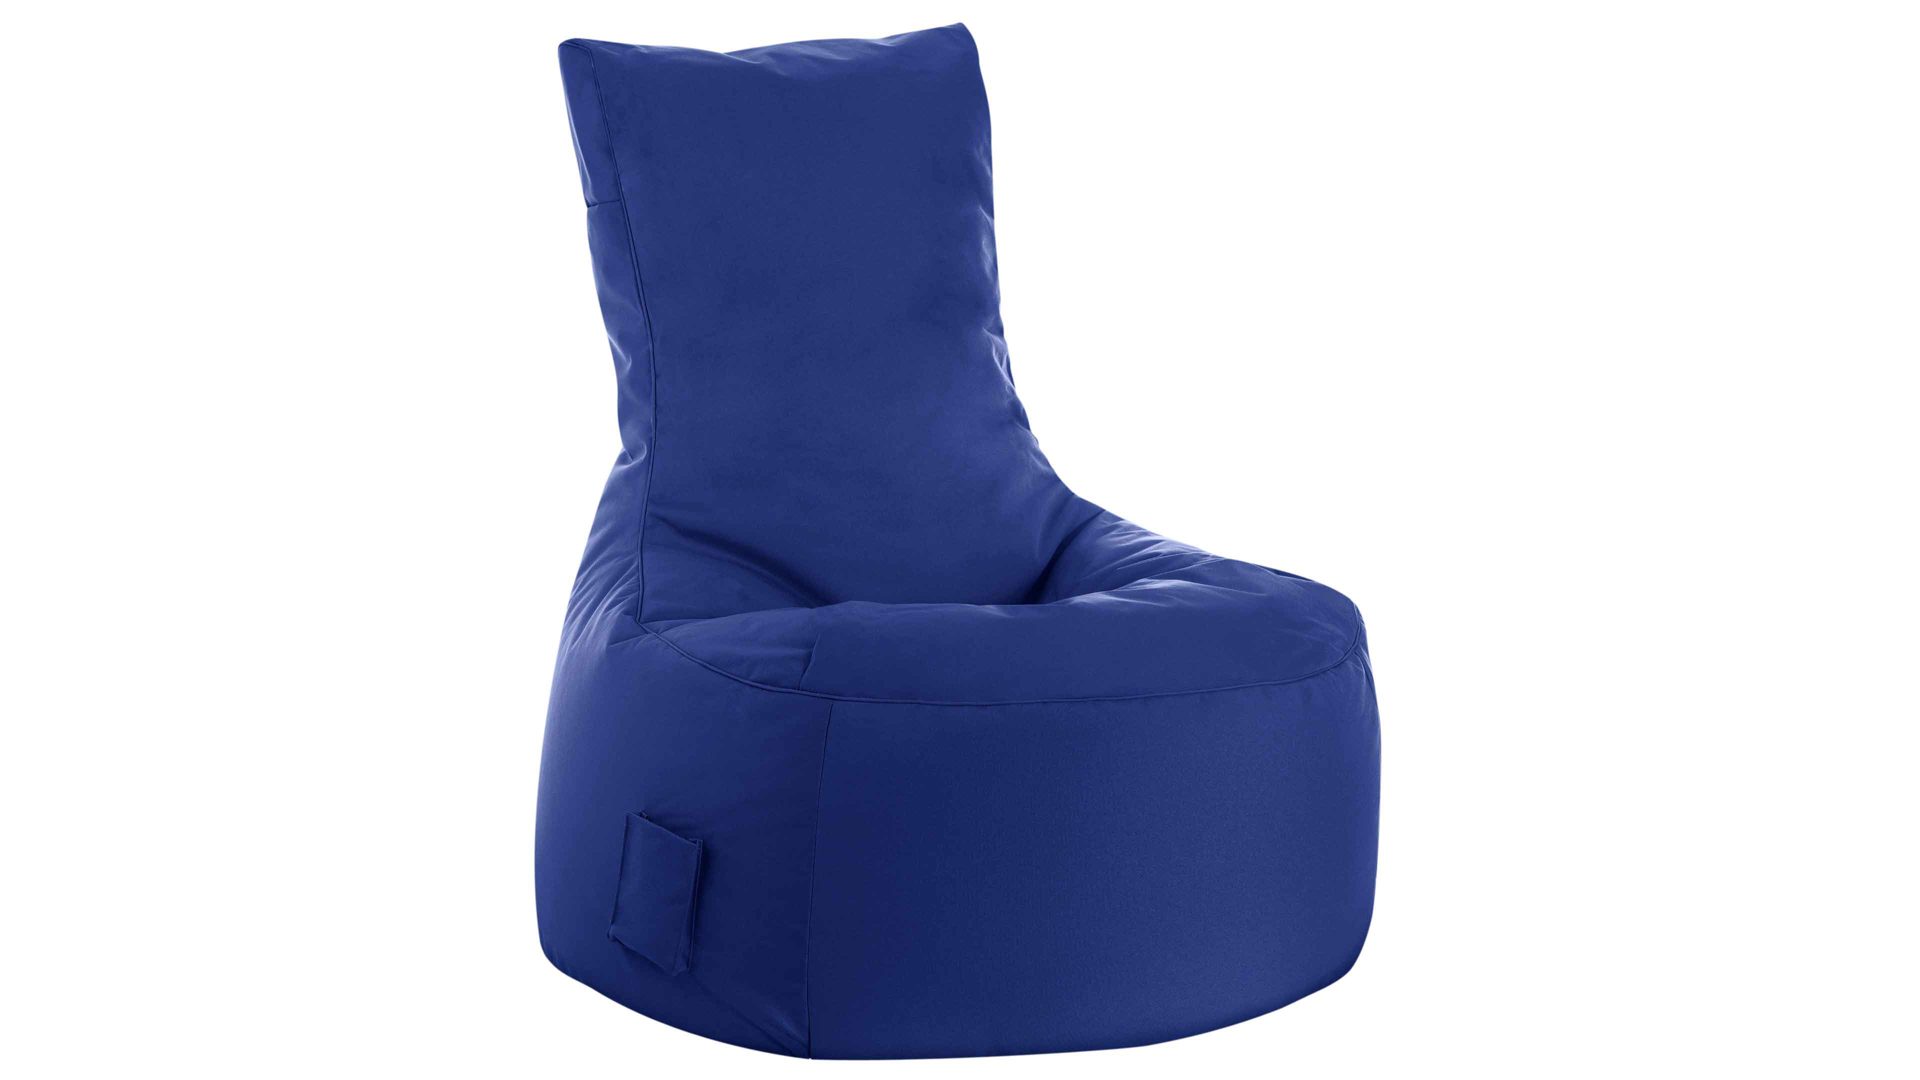 Sitzsack-Sessel Magma sitting point aus Kunstfaser in Blau SITTING POINT Sitzsack-Sessel swing scuba® dunkelblaue Kunstfaser - ca. 95 x 90 x 65 cm